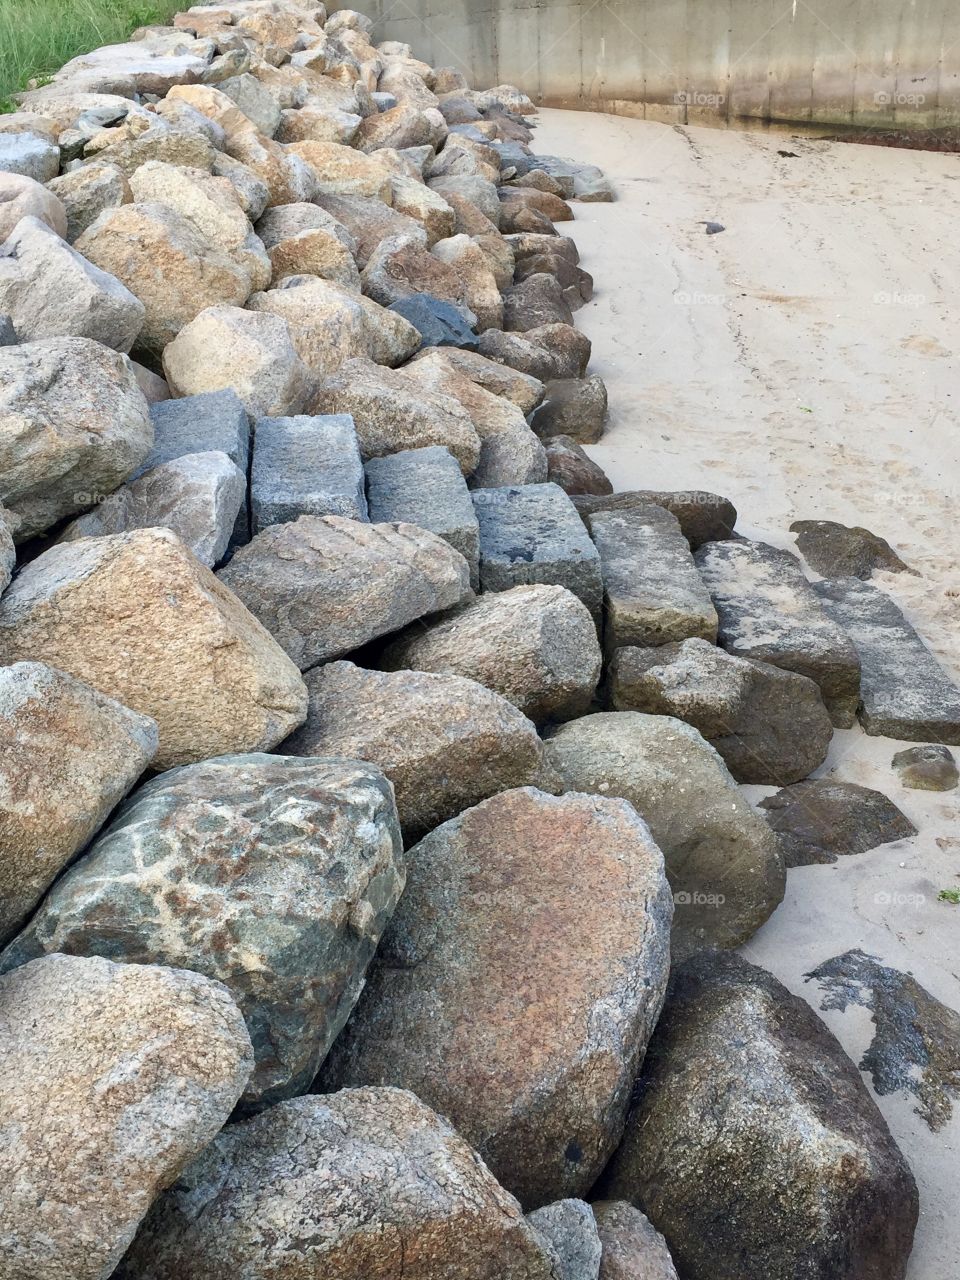 Rocks on shore in Provincetown, MA.